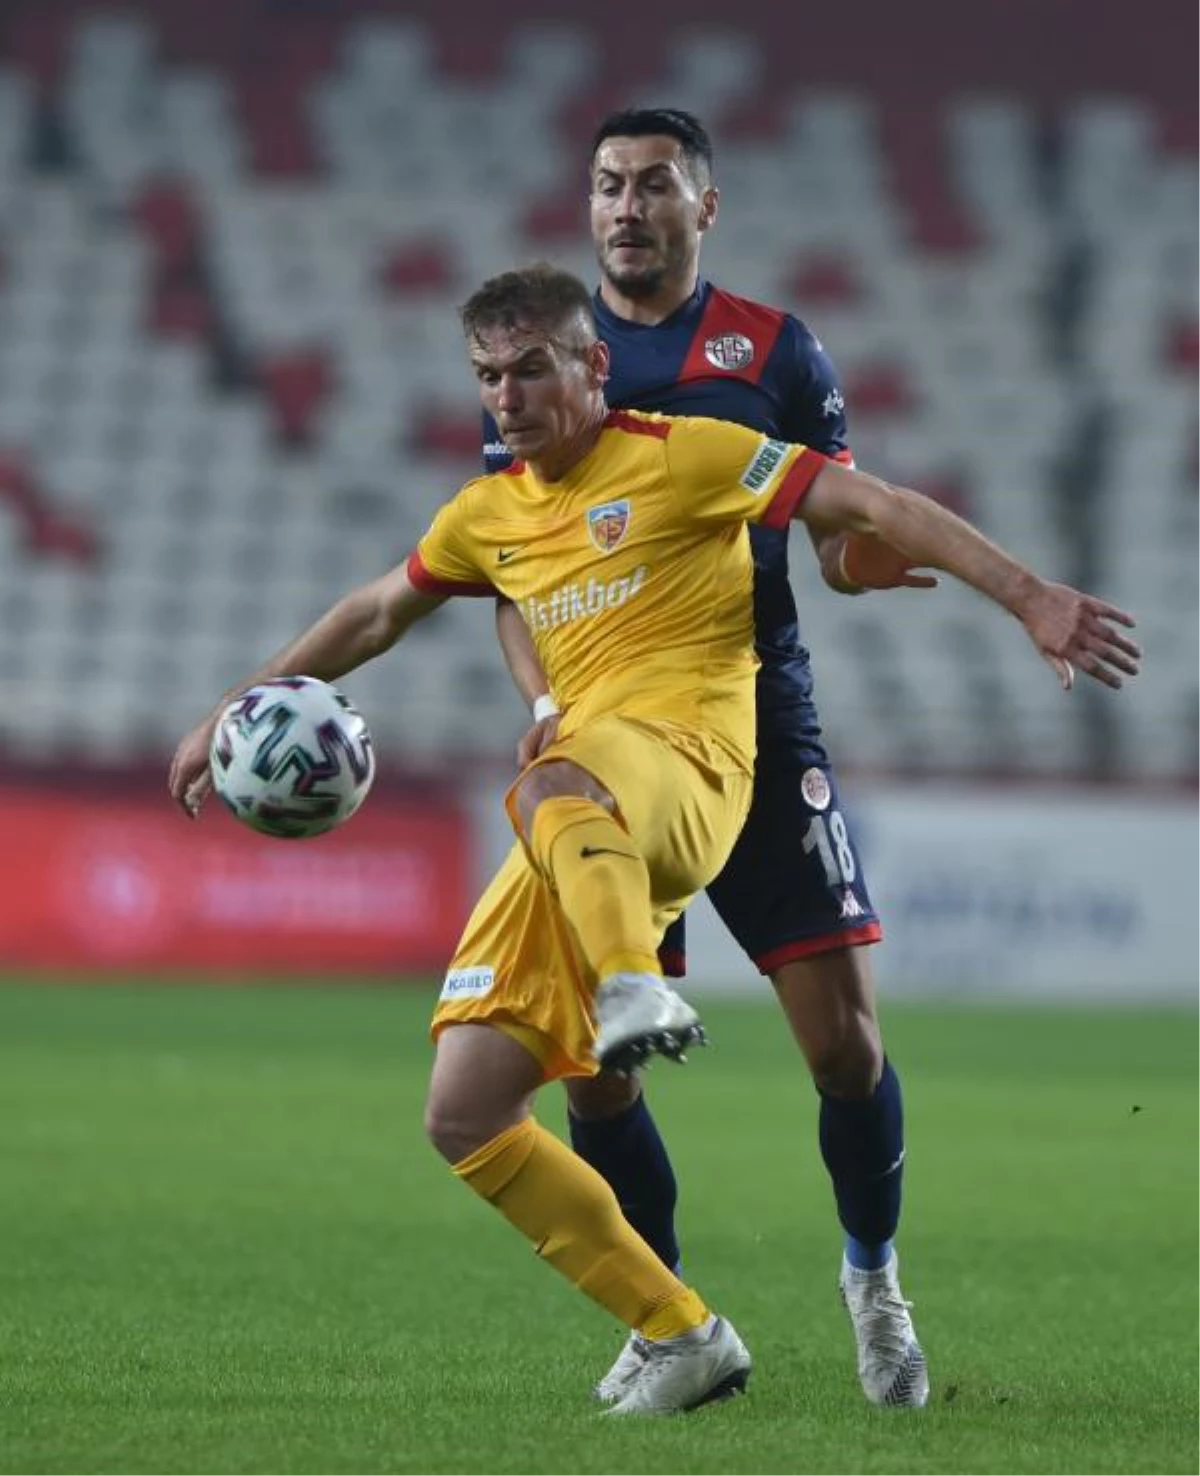 Fraport TAV Antalyaspor - Hes Kablo Kayserispor: 2-0